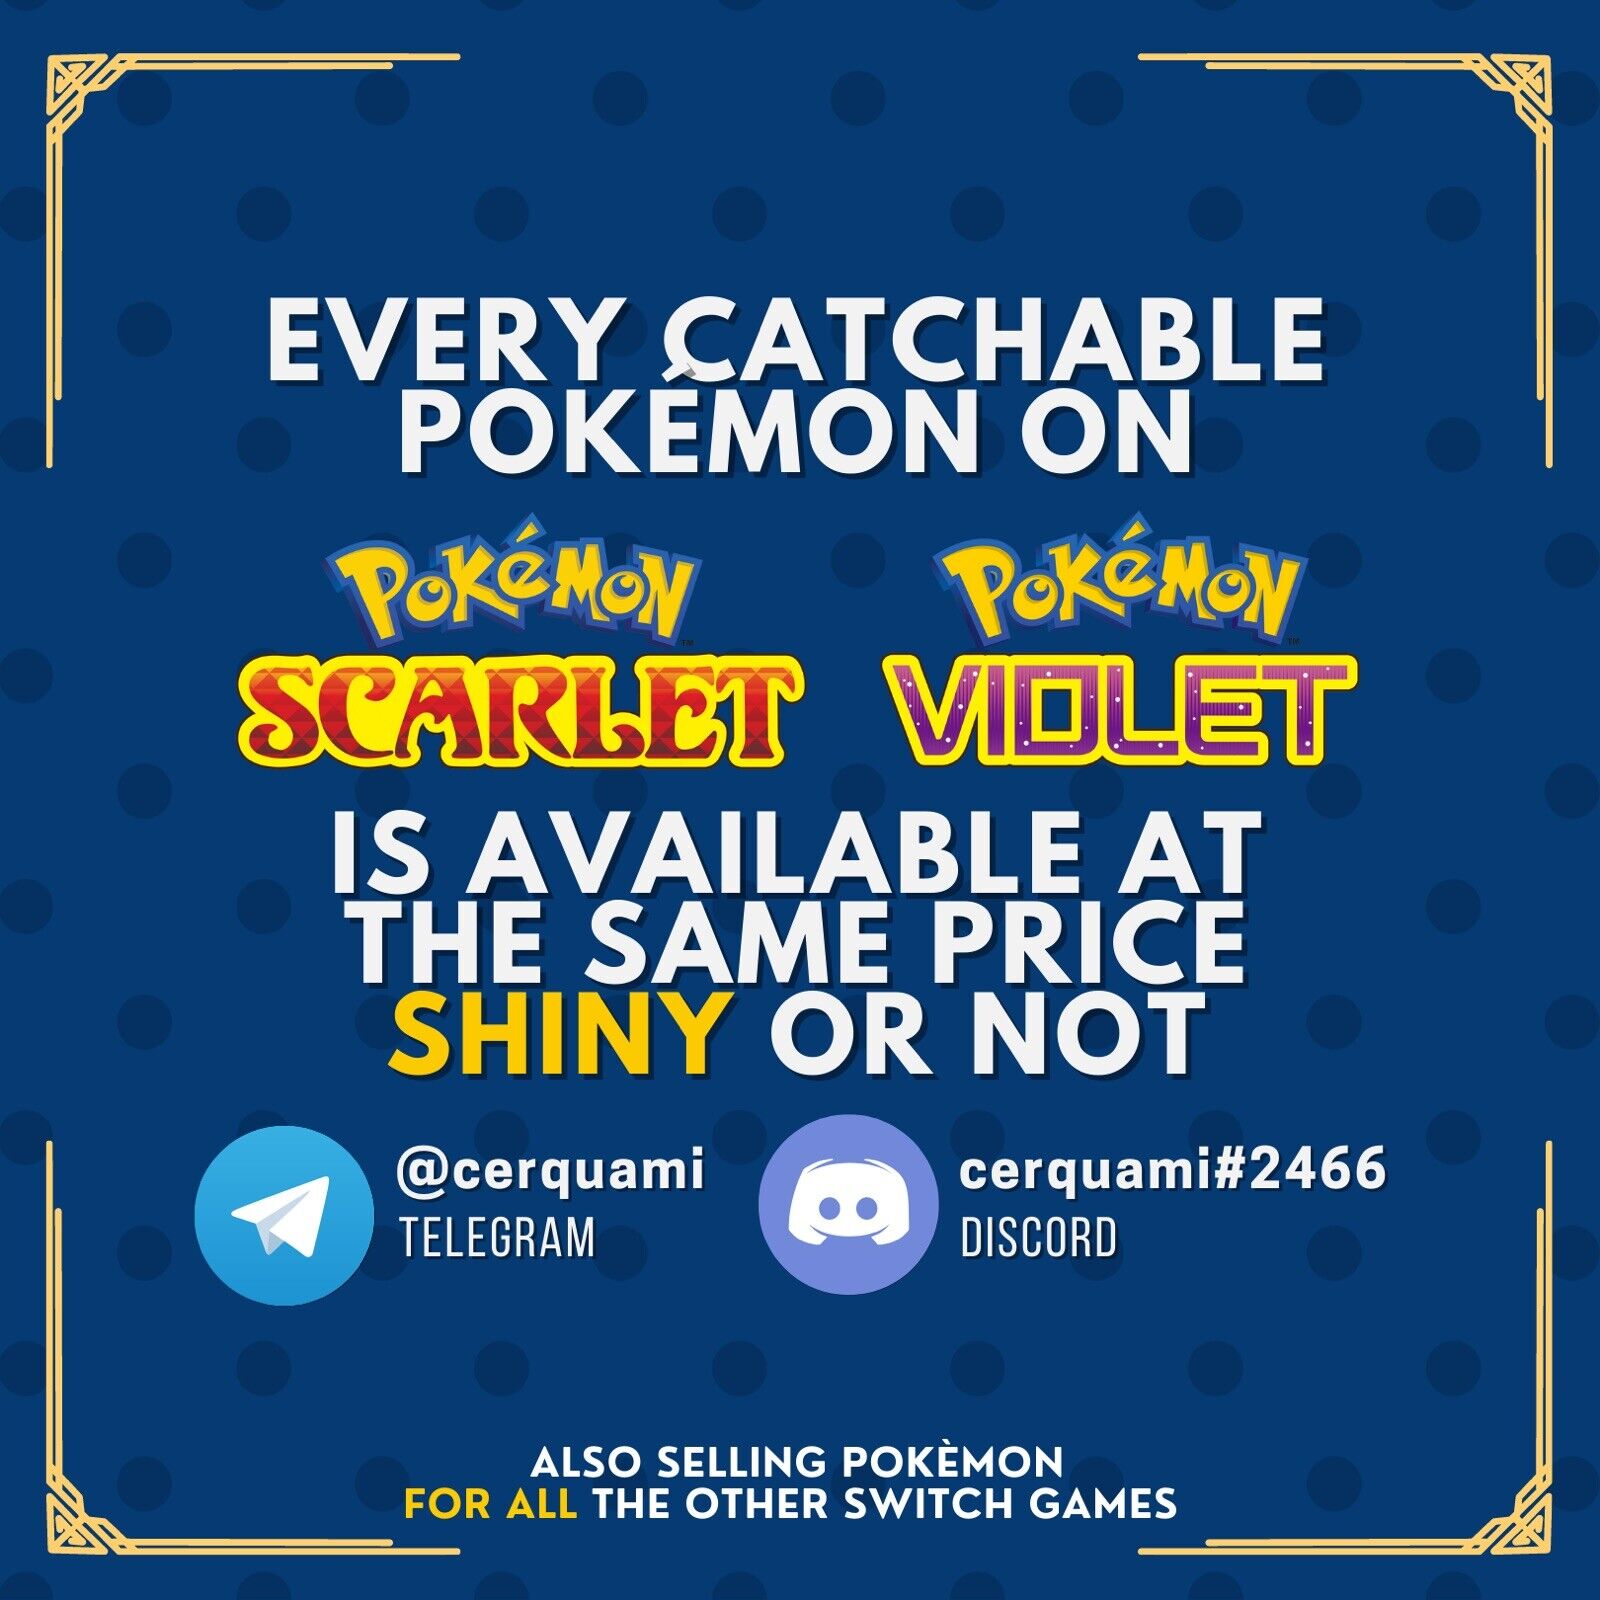 Pikachu Tera Flying Event Early Purchase Bonus Untouched Pokémon Scarlet Violet Non shiny Level 5 by Shiny Living Dex | Shiny Living Dex